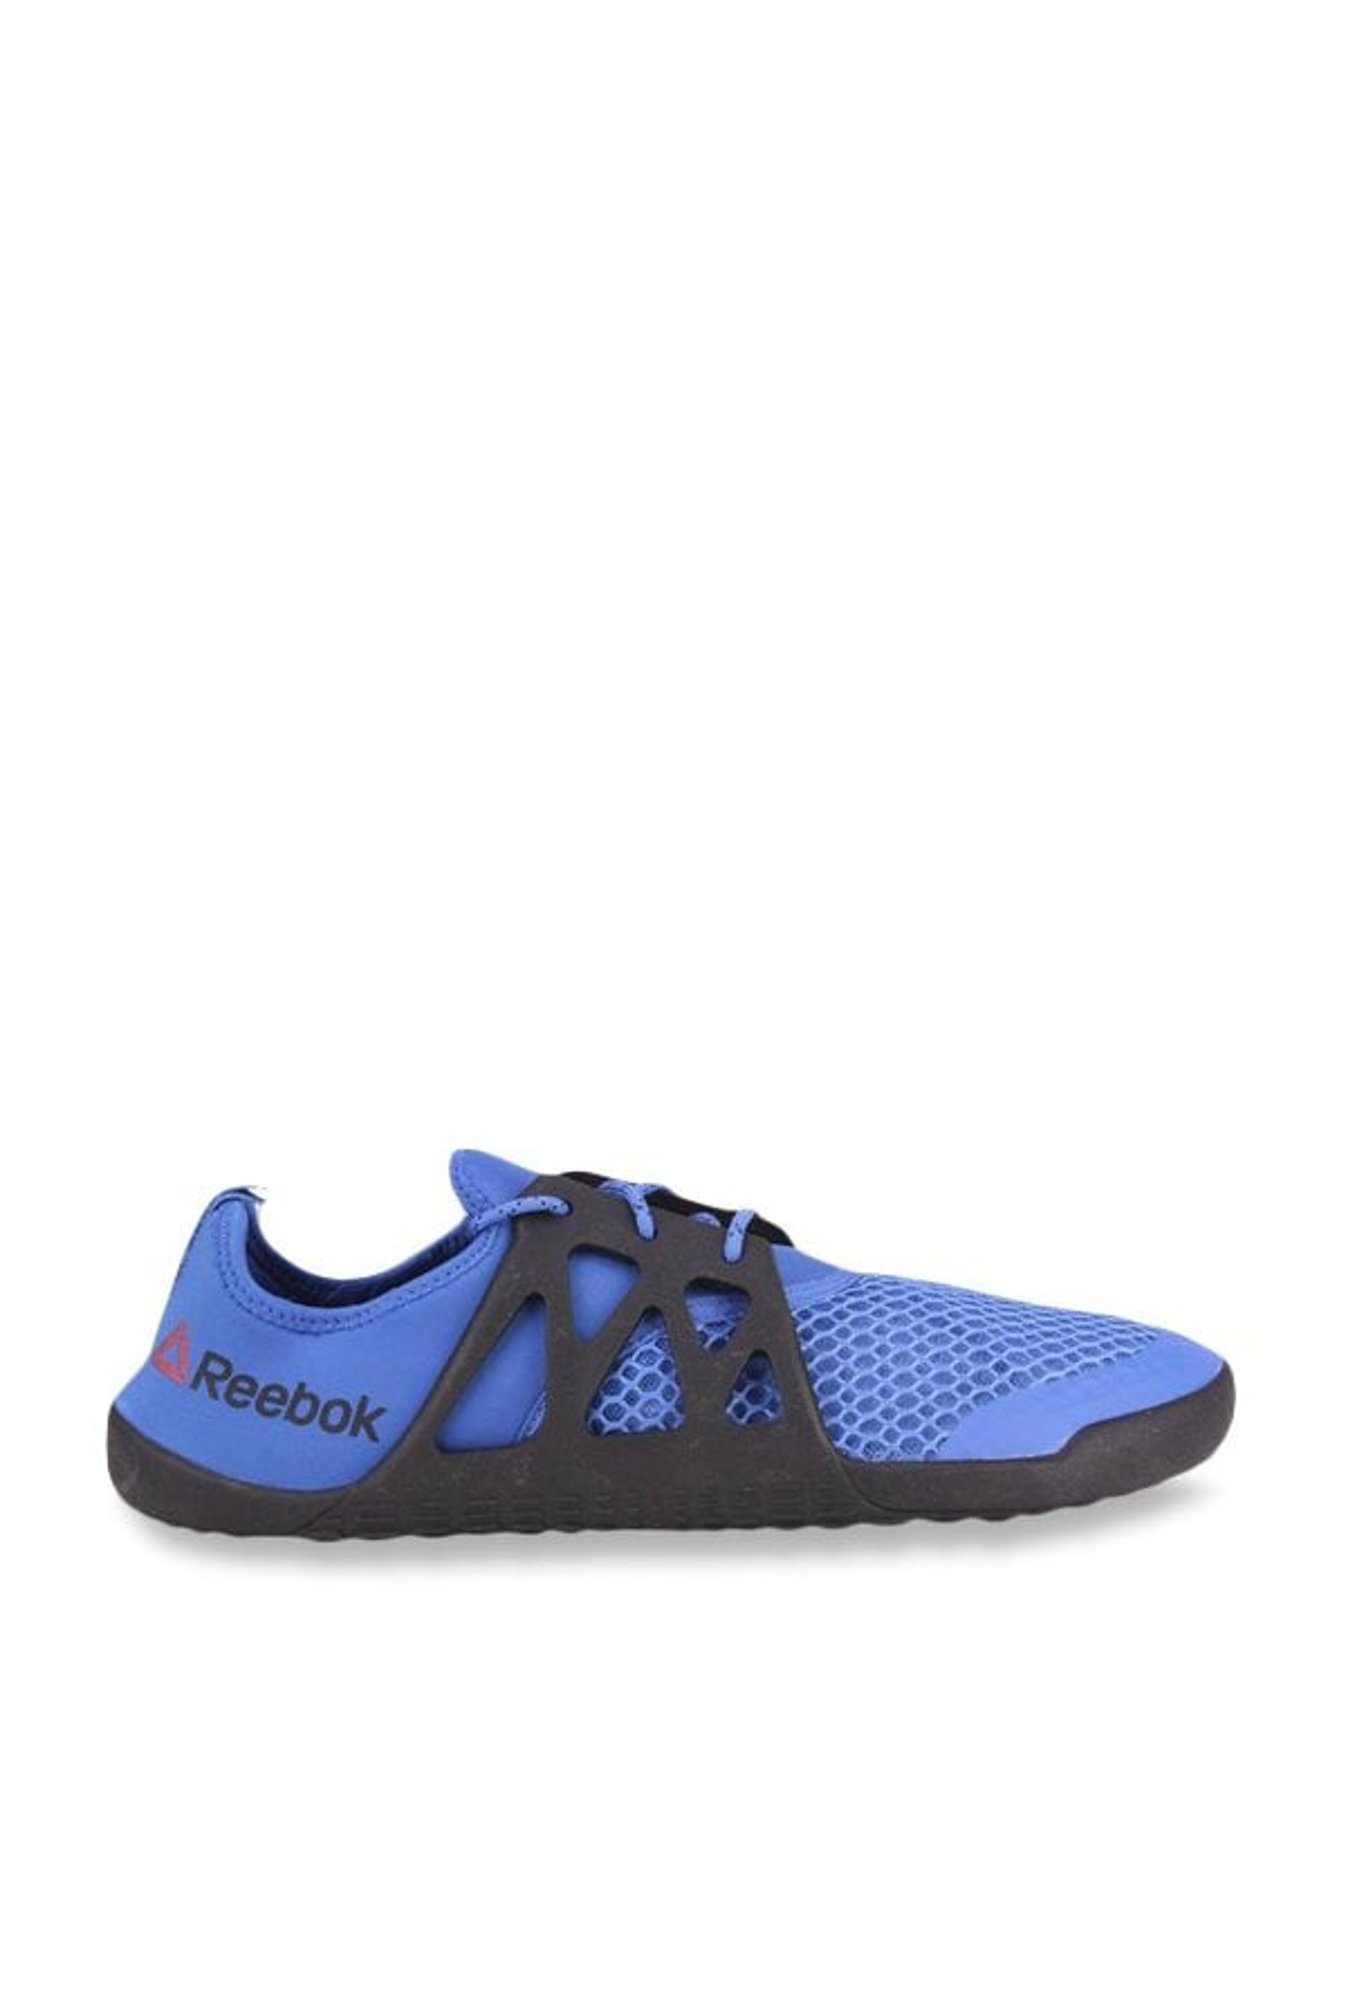 reebok aqua grip training shoes